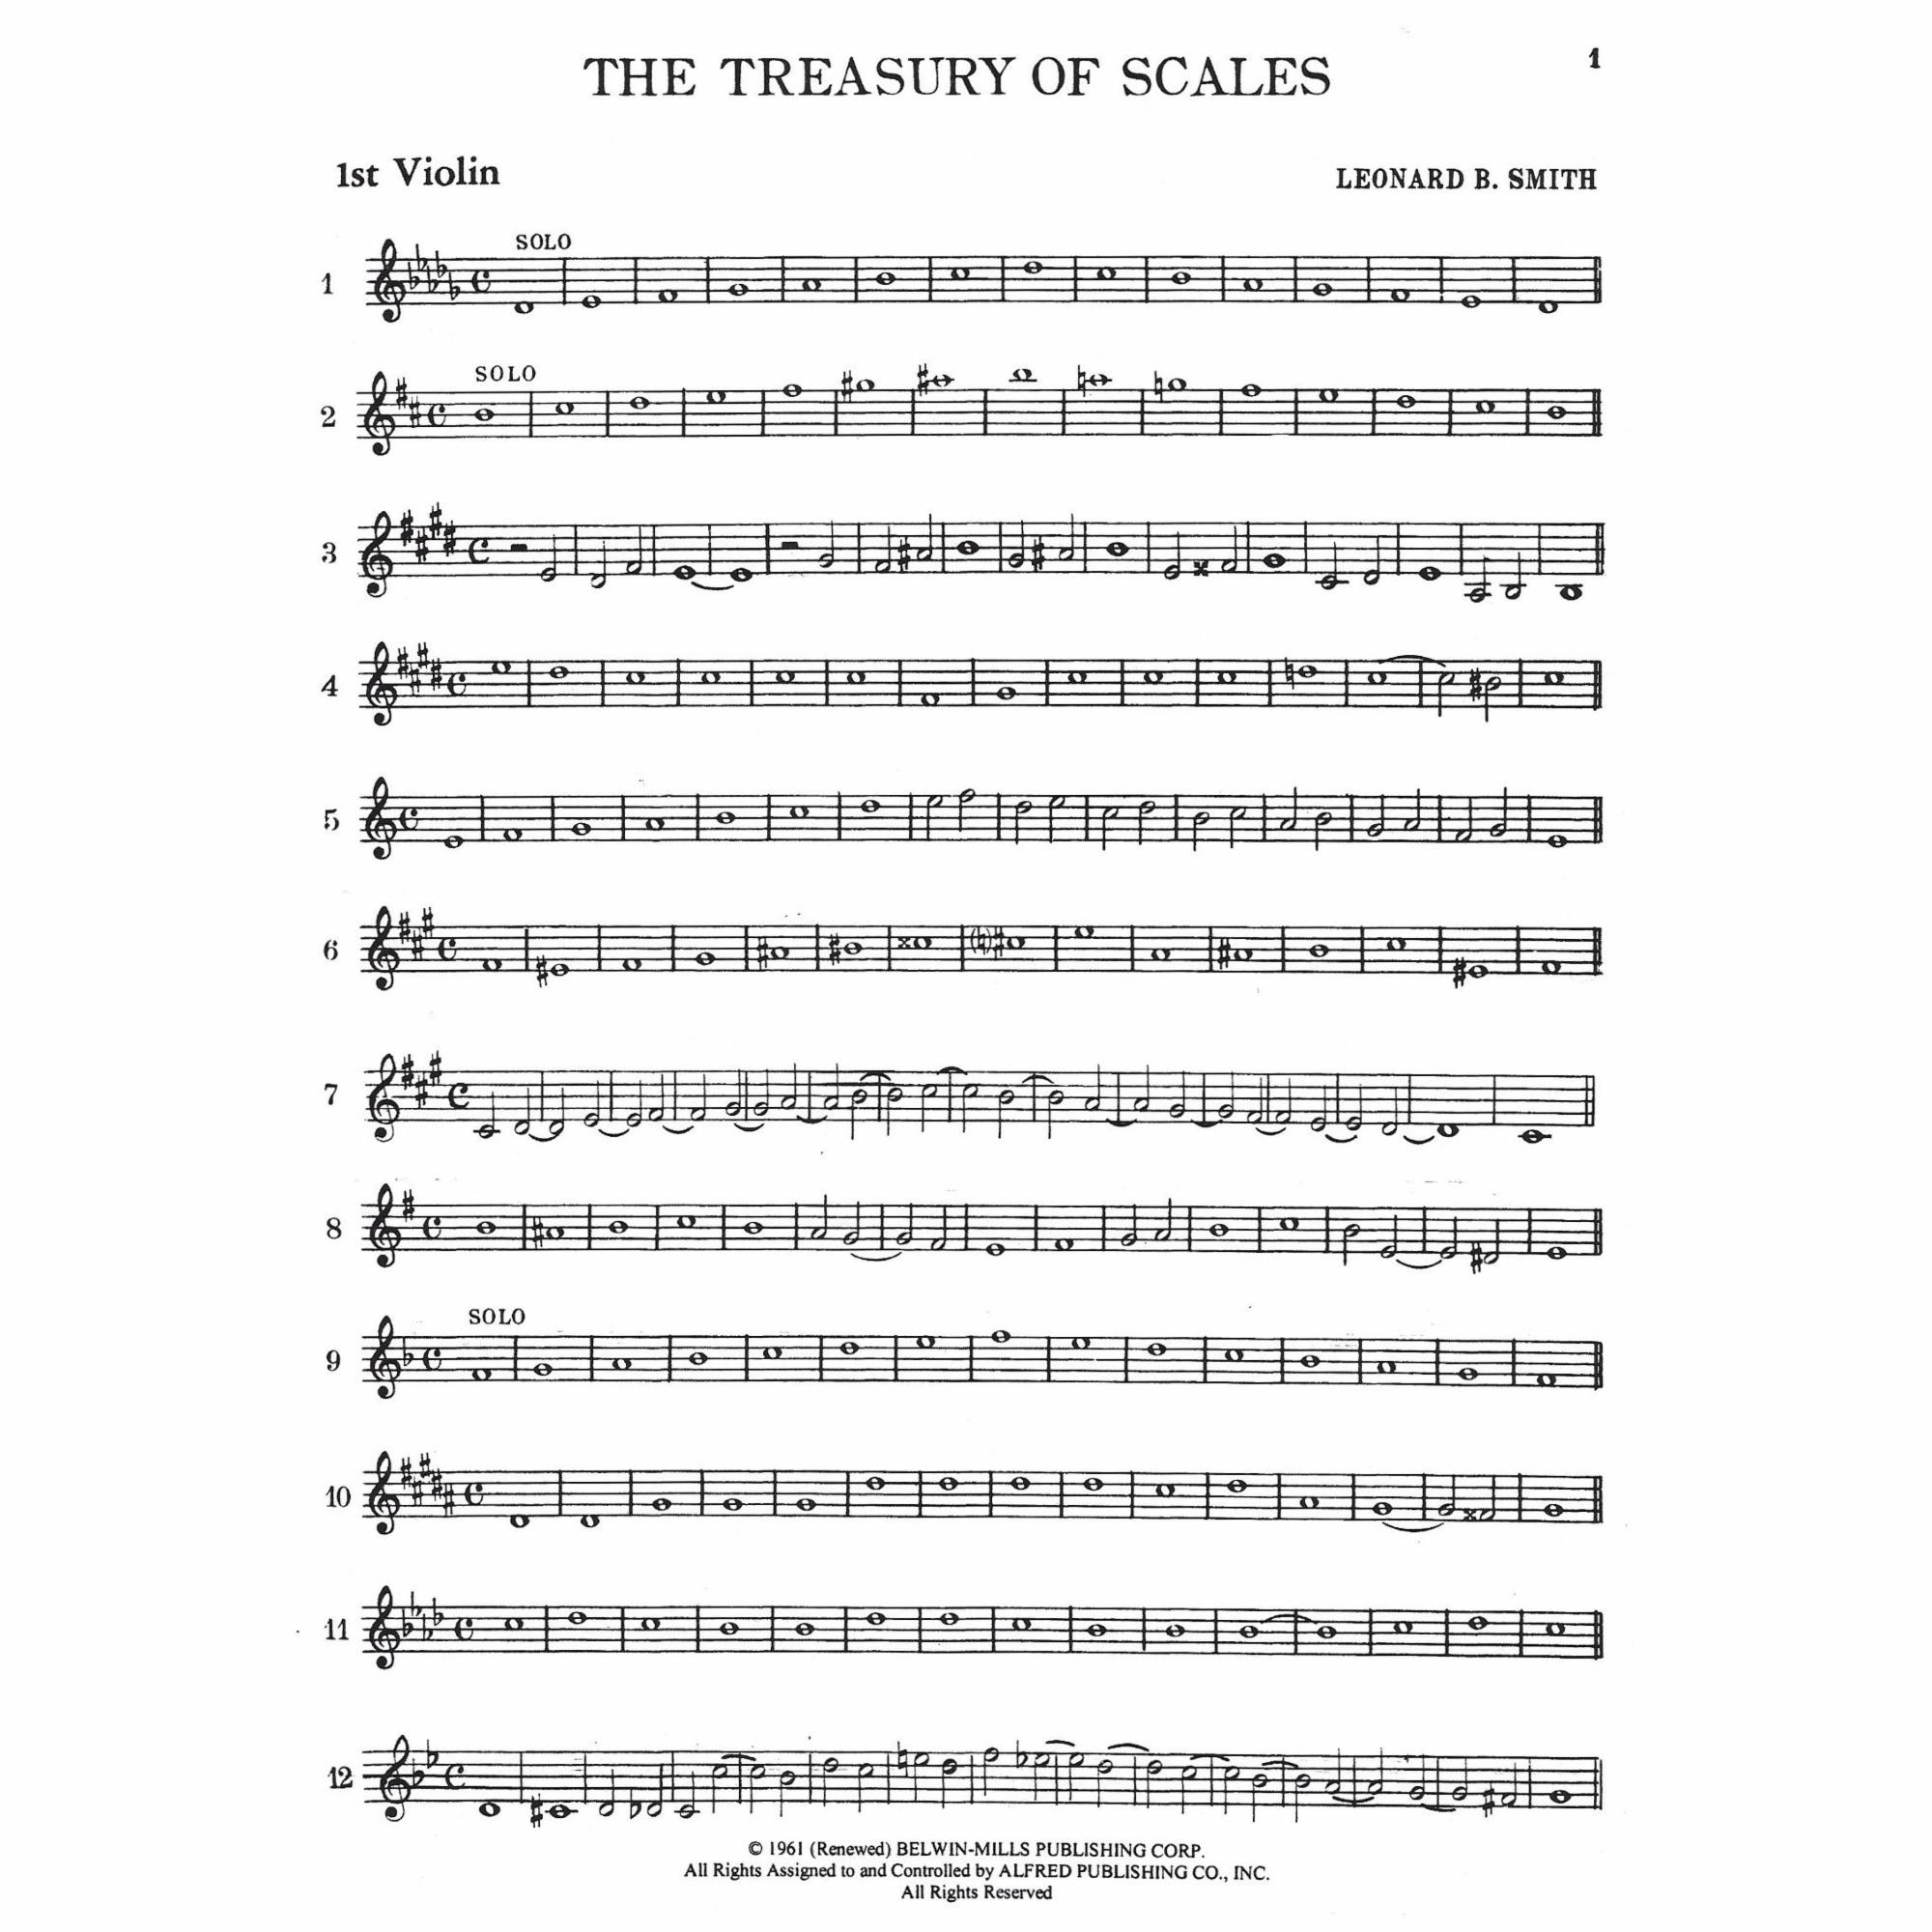 Sample: First Violin (Pg. 1)